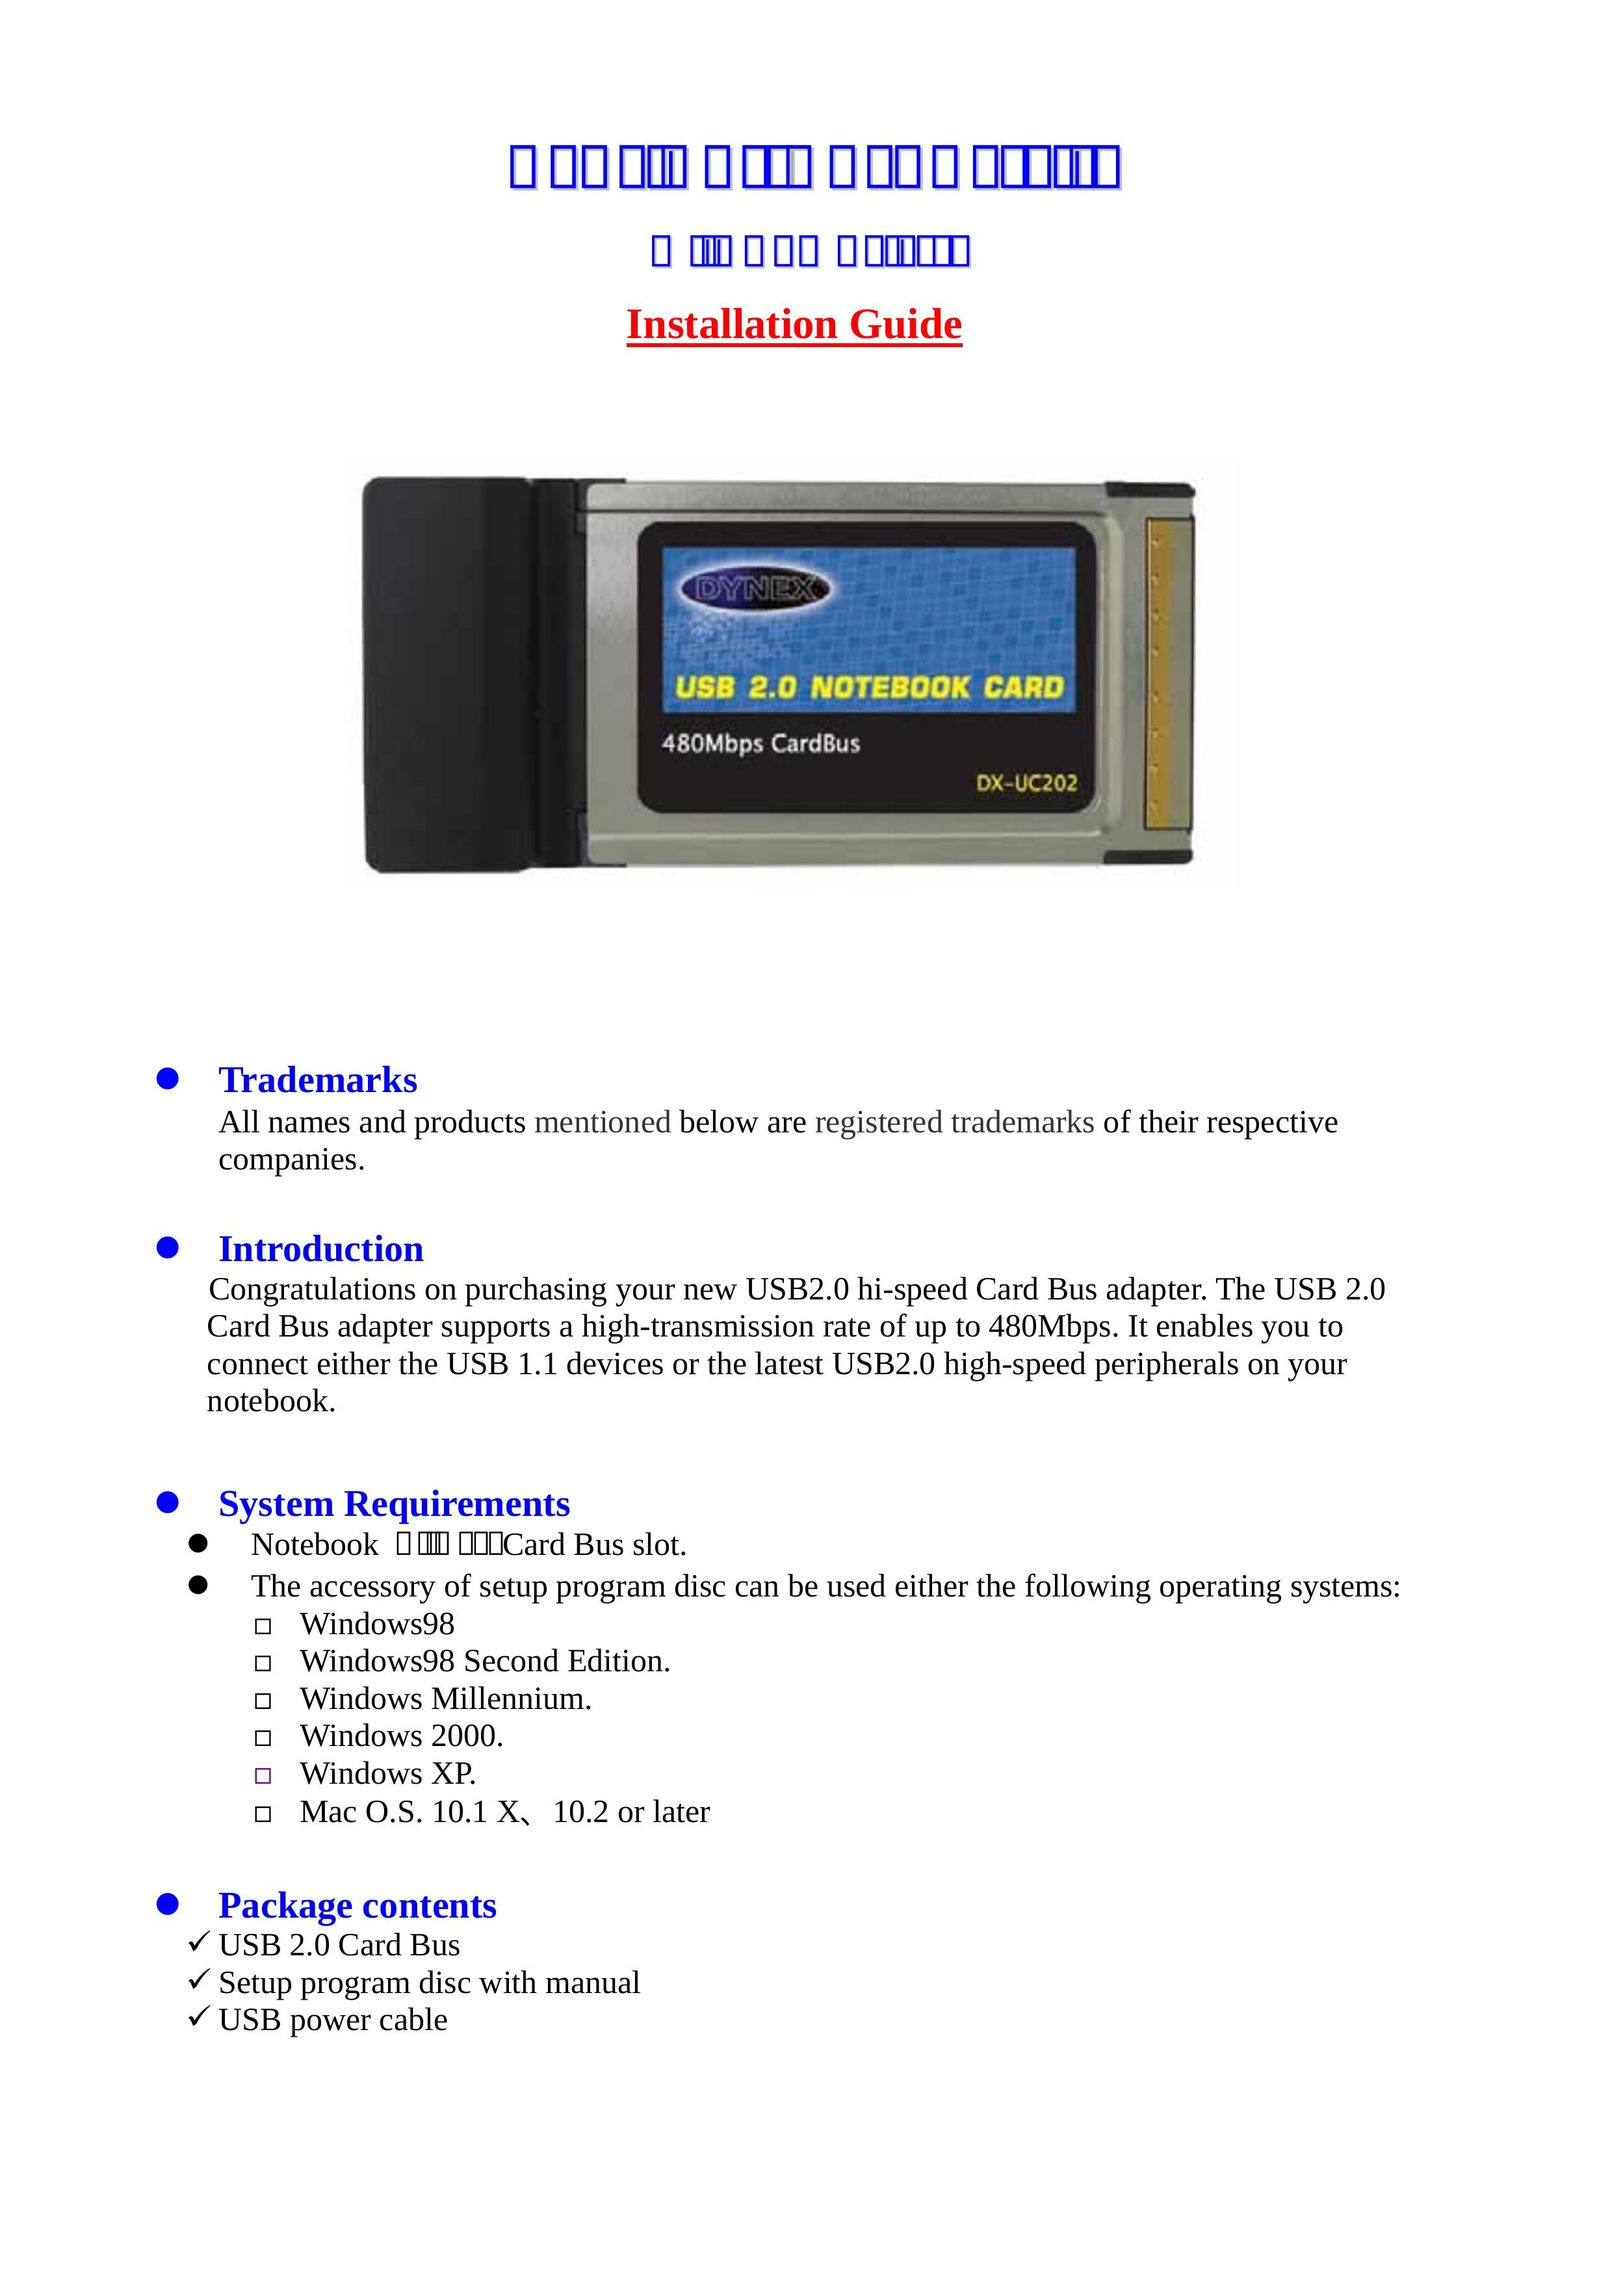 Dynex DX-UC202 Network Card User Manual